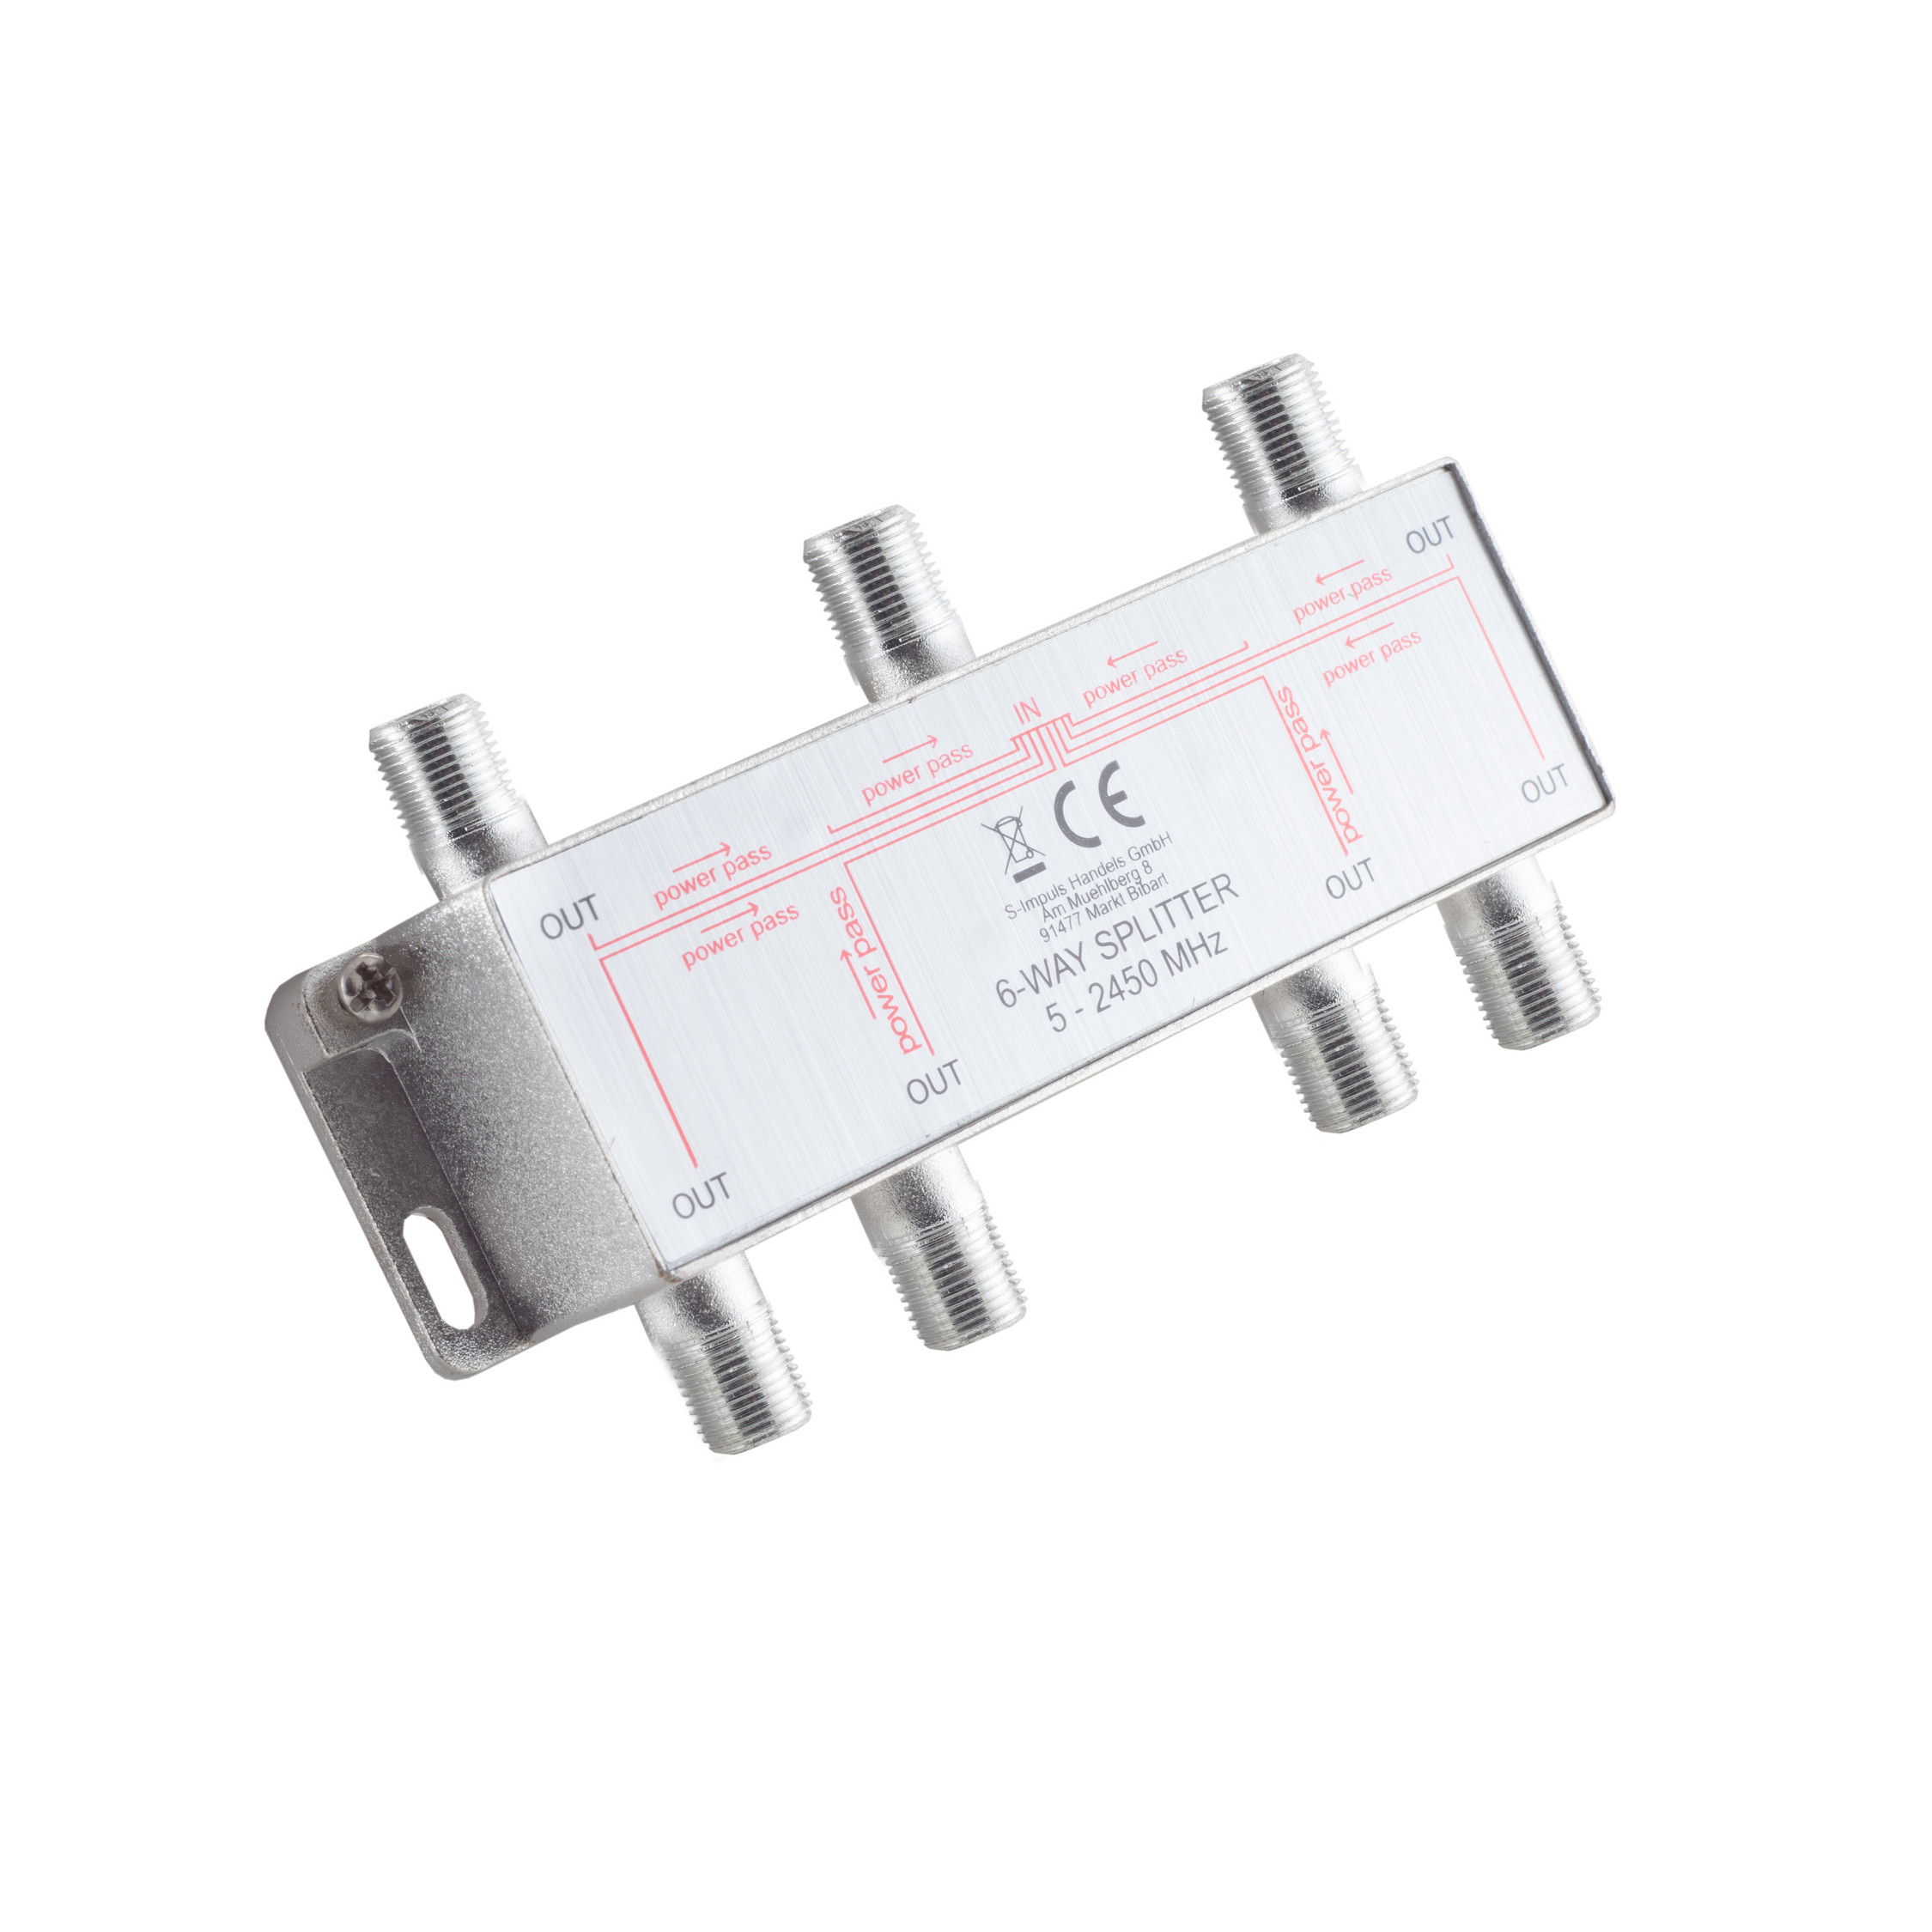 S/CONN MAXIMUM CONNECTIVITY F-Serie; Stammverteiler; 5-2400 6-fach; (Koax) Antennen MHz DC